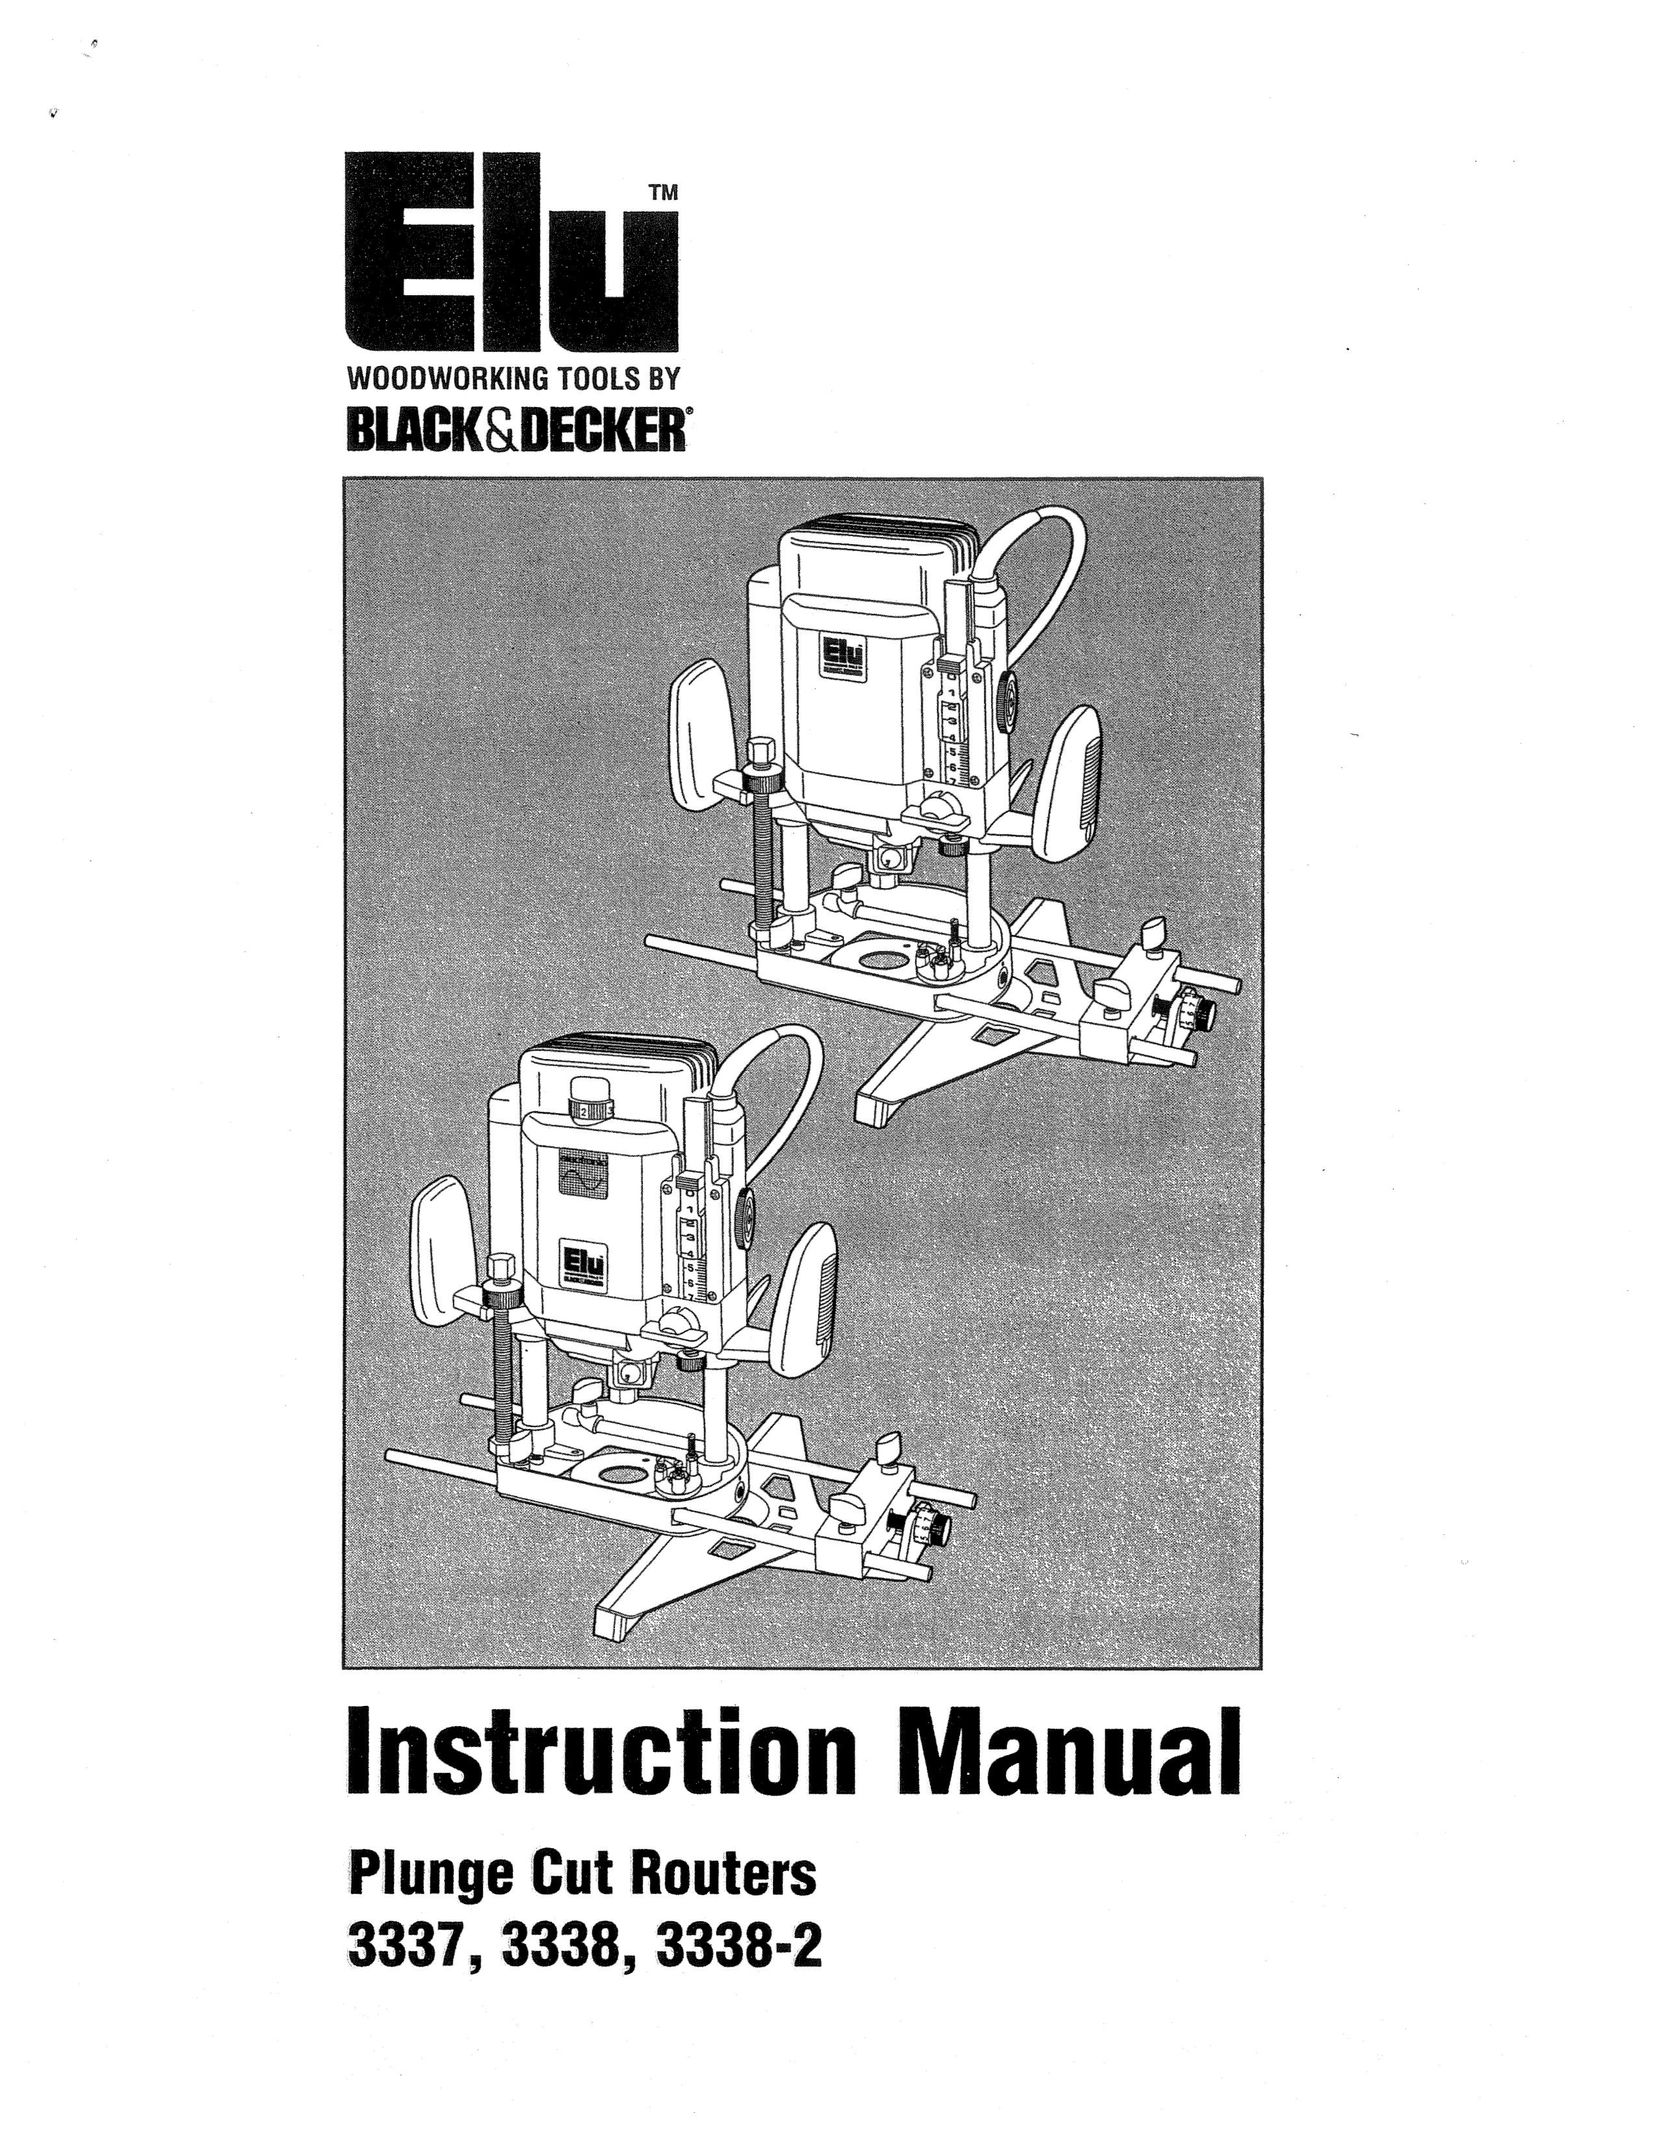 Black & Decker 3338-2 Router User Manual